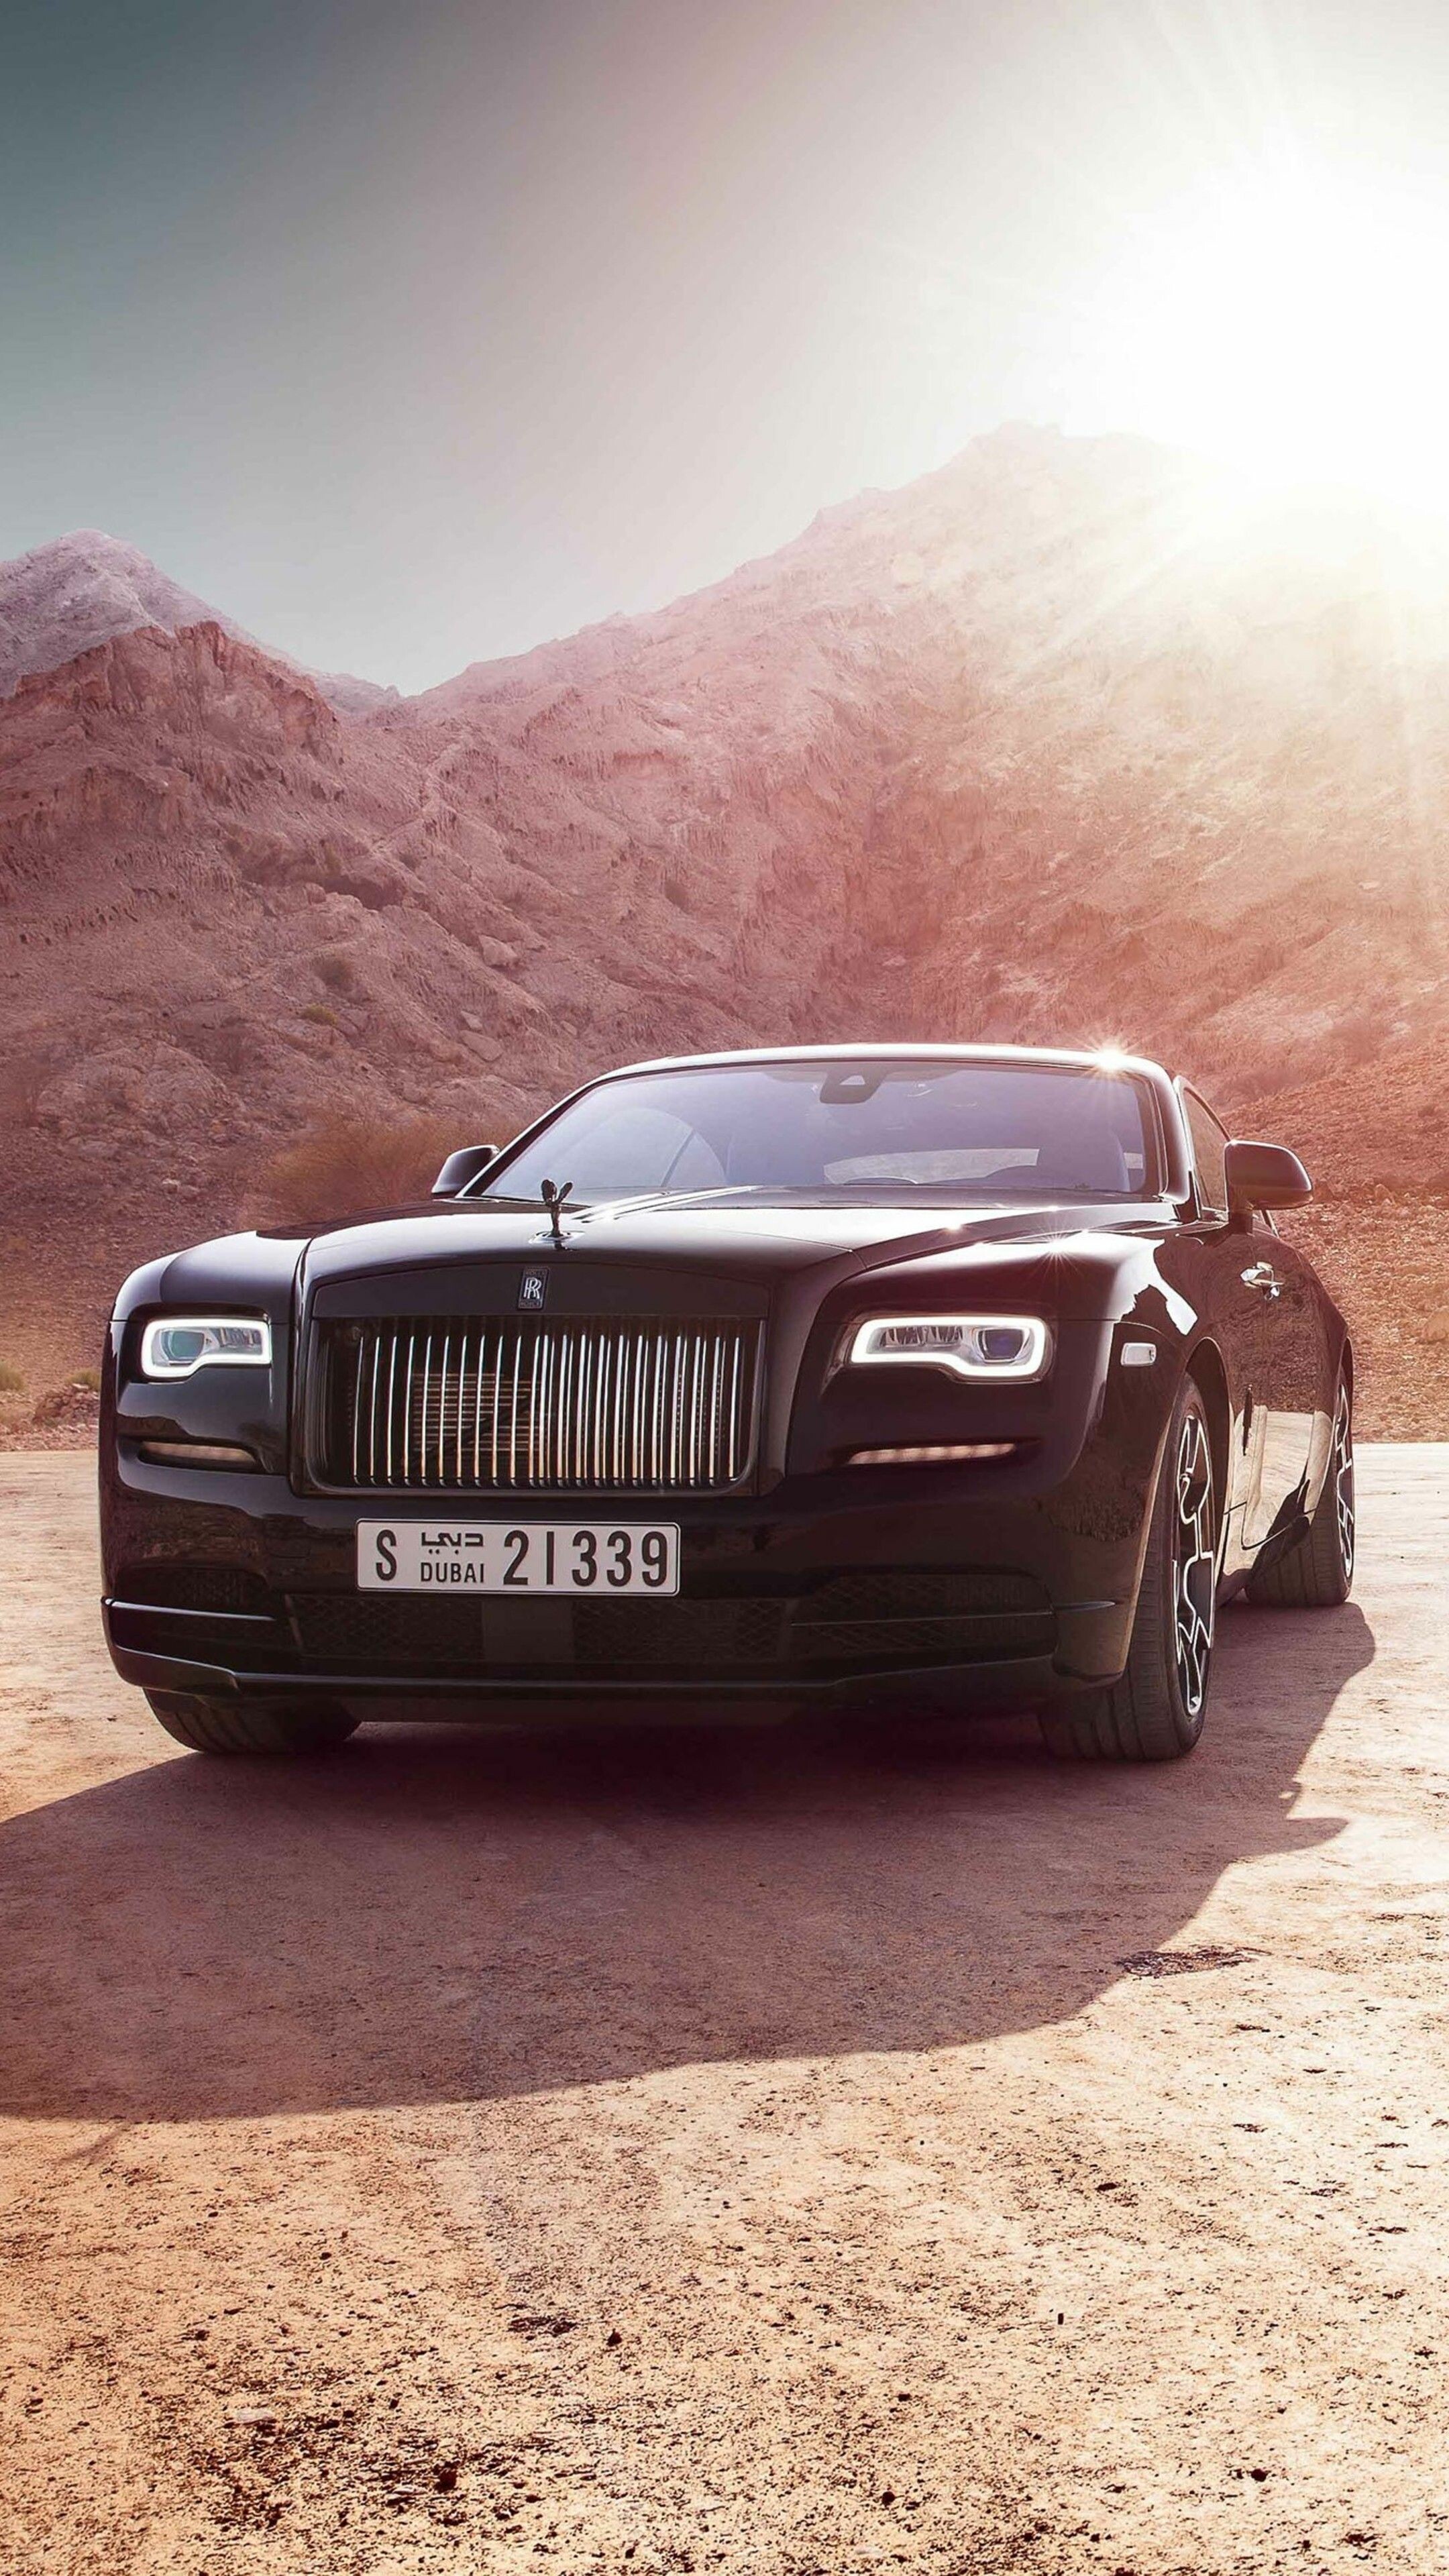 Rolls-Royce: Model Wraith, Luxury cars, British automotive brand. 2160x3840 4K Background.